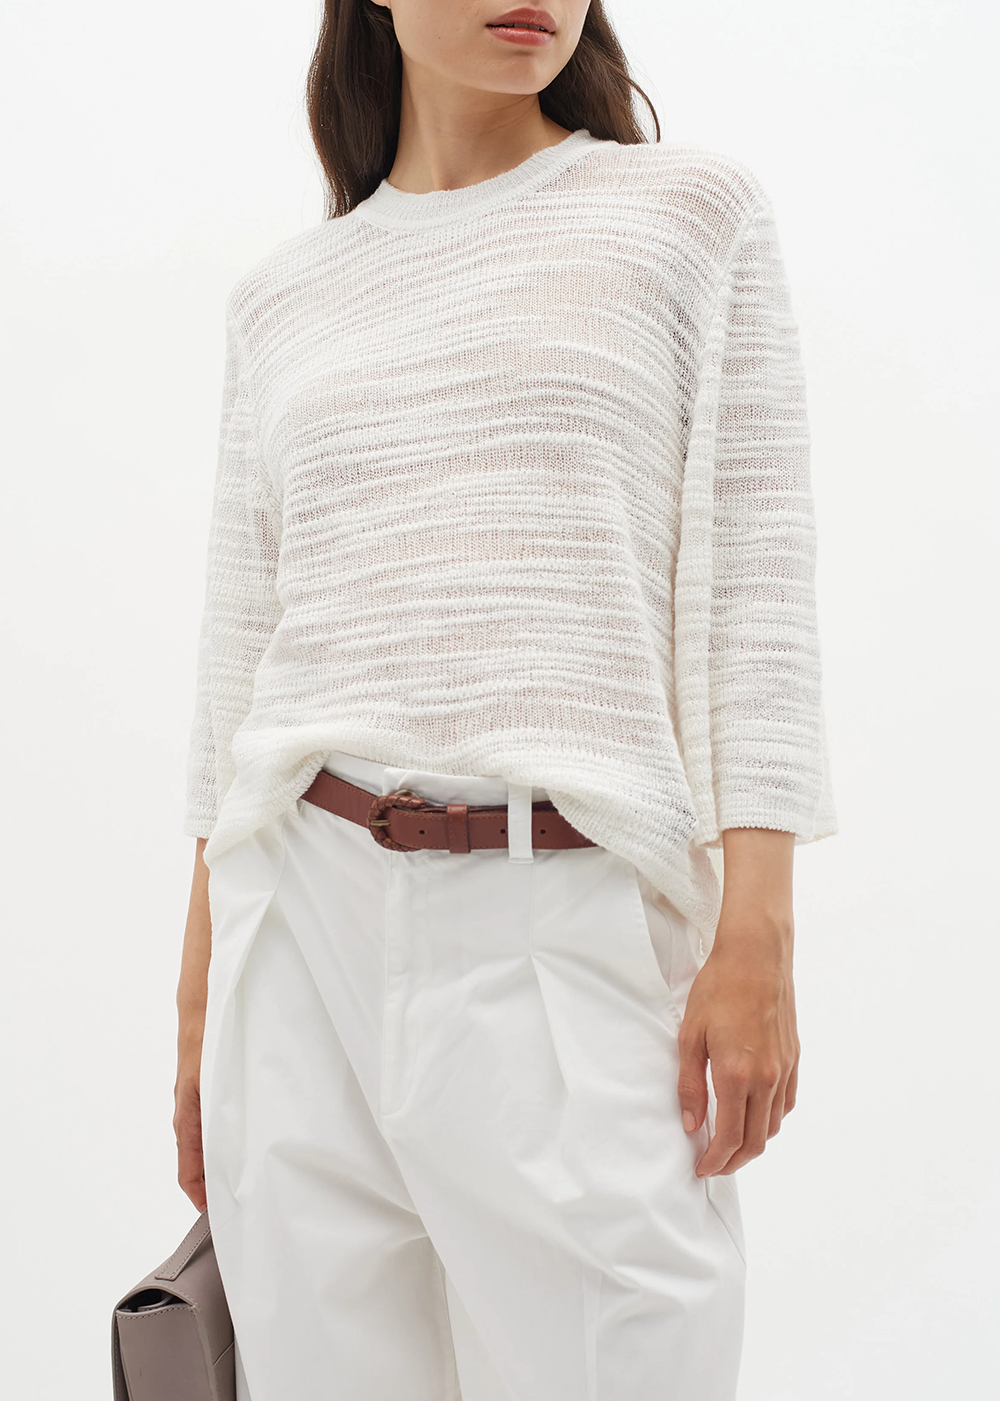 Lune Pullover Sweater - White - InWear - Danali